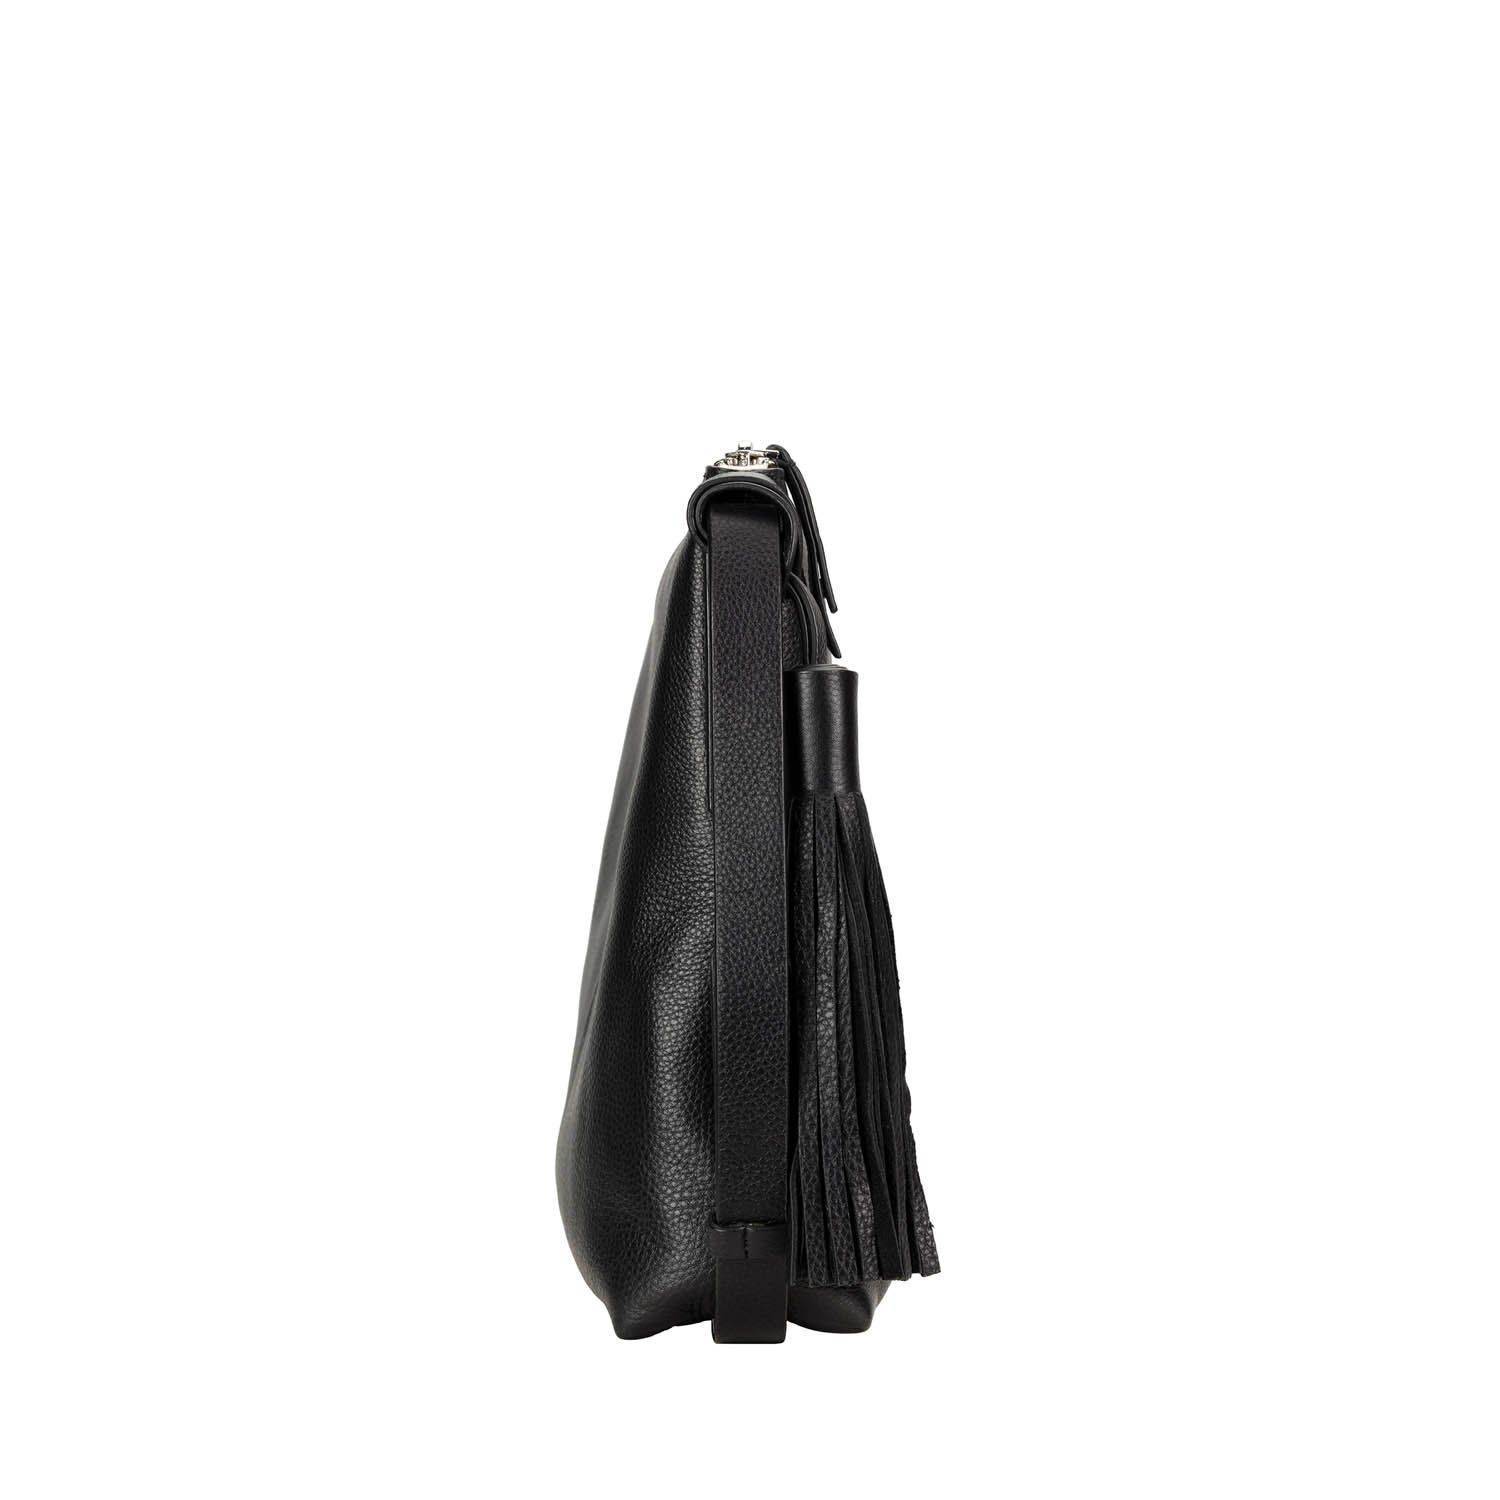 Городская сумка Clarks Topsham Shine 26148208, цвет черный, размер ONE SIZE - фото 3